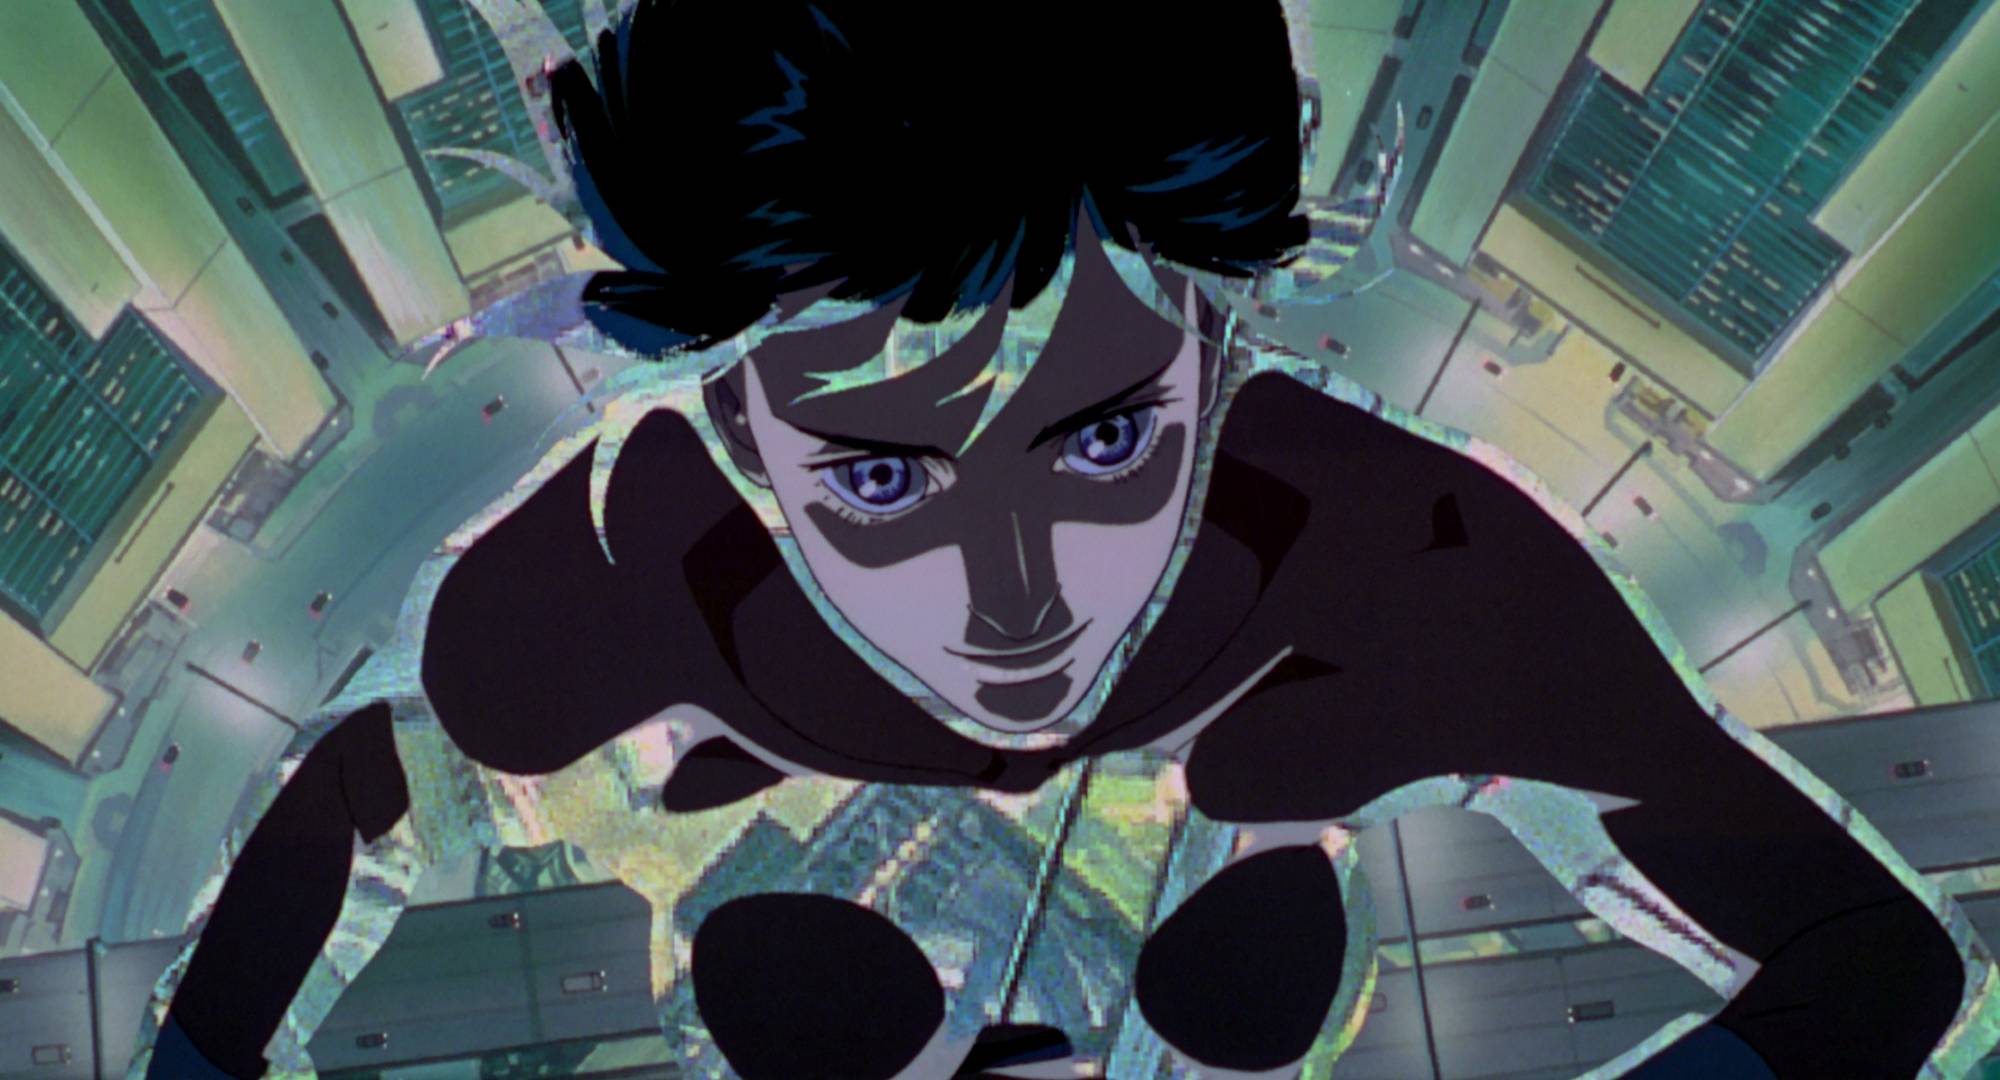 Cyberpunk specter: Mamoru Oshii’s “Ghost in the Shell” is an adaptation of the original manga by Masamune Shirow. | © 1995 SHIROW MASAMUNE/KODANSHA LIMITED・BANDAI VISUAL COMPANY LIMITED/MANGA ENTERTAINMENT LIMITED